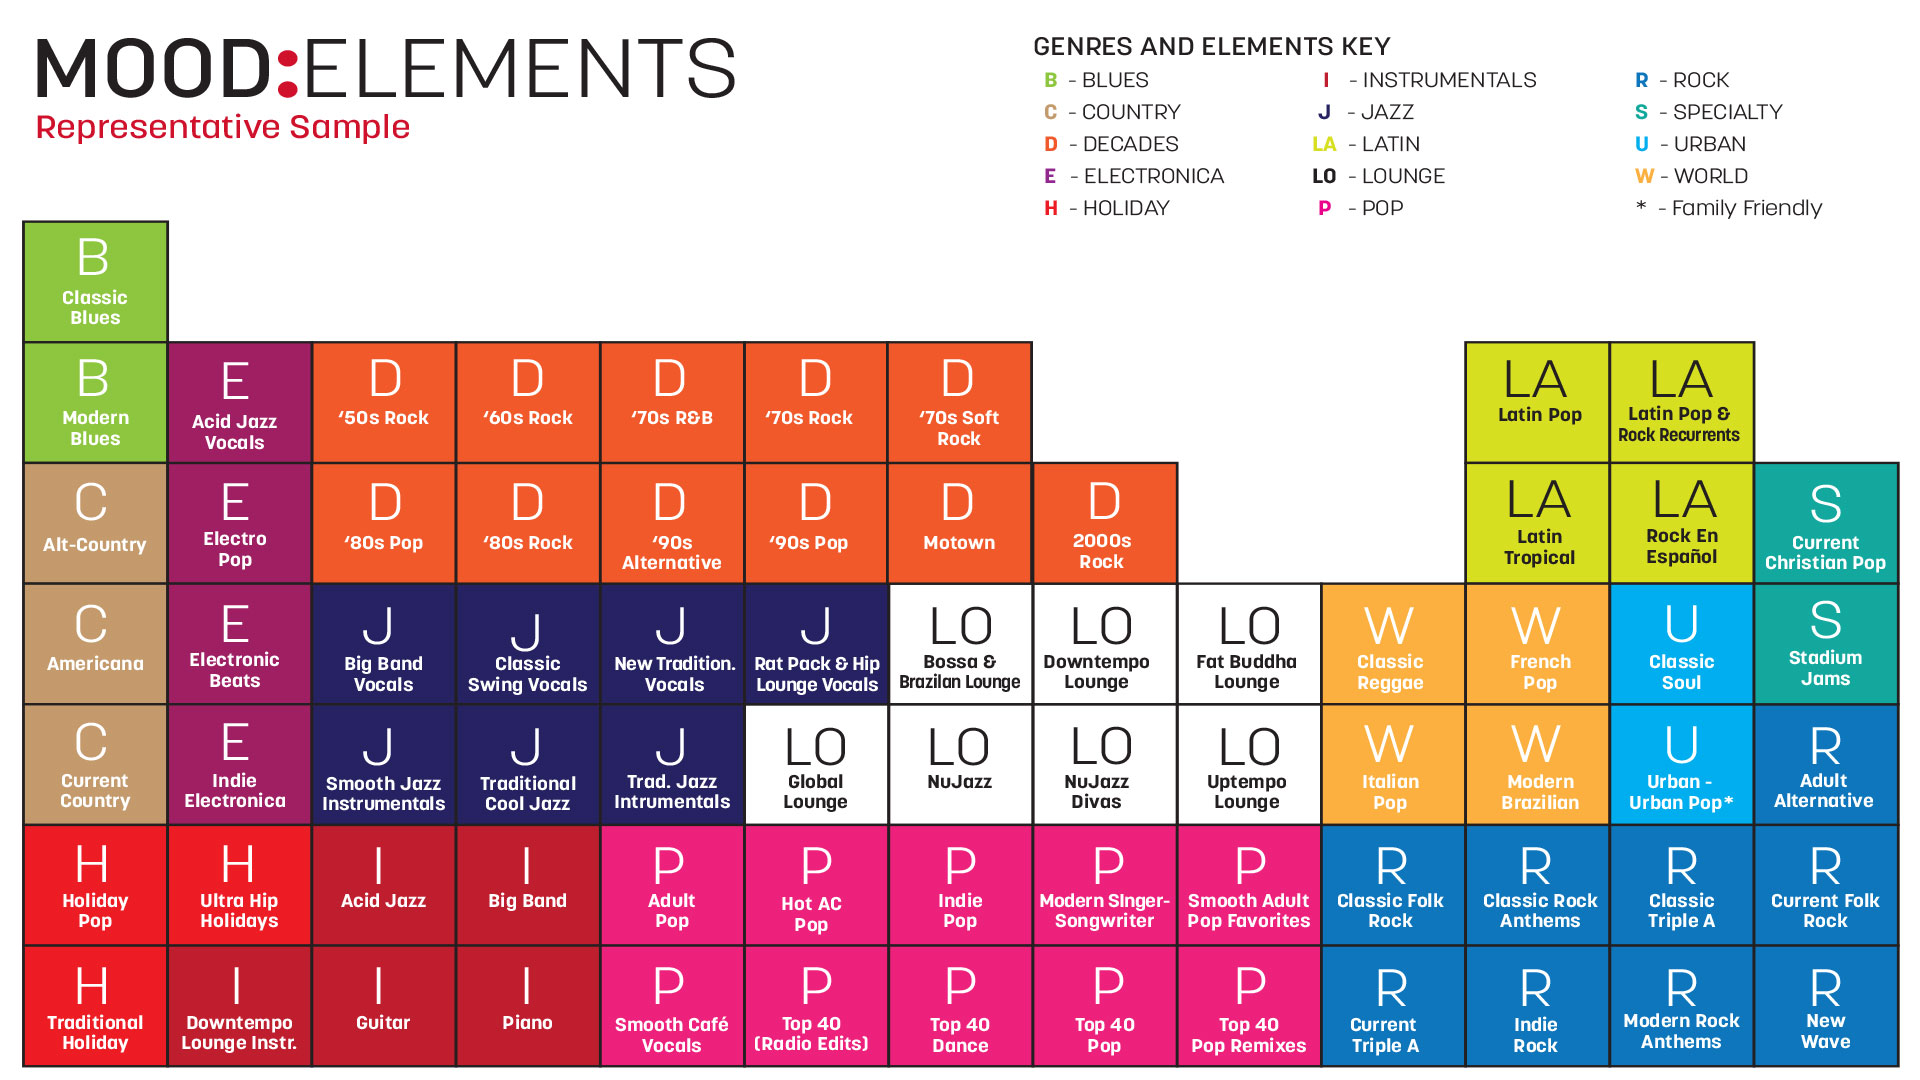 Music Elements